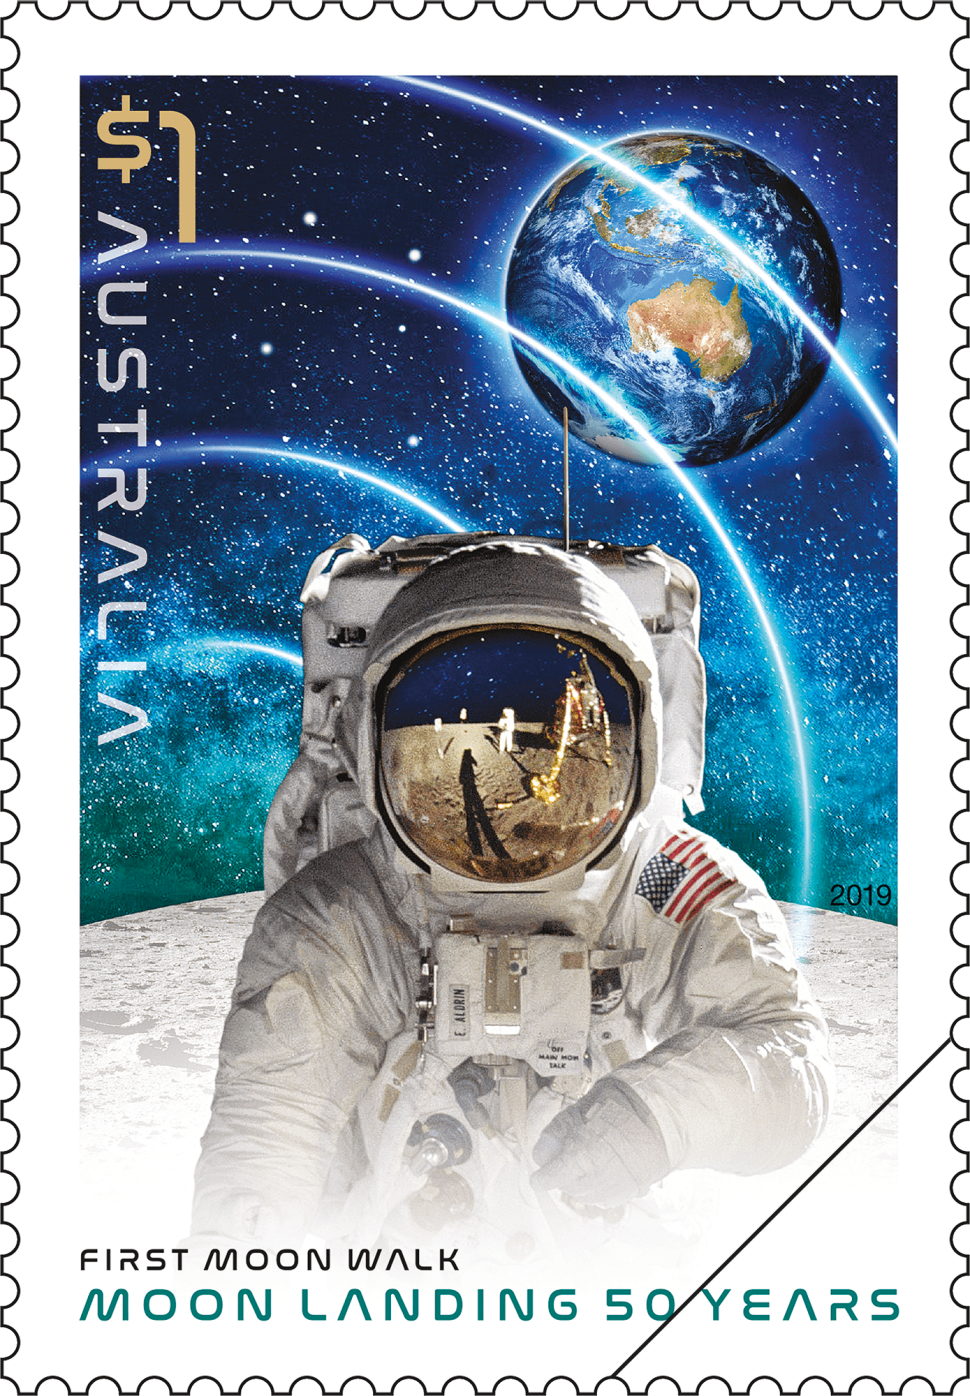 First Moon walk stamp